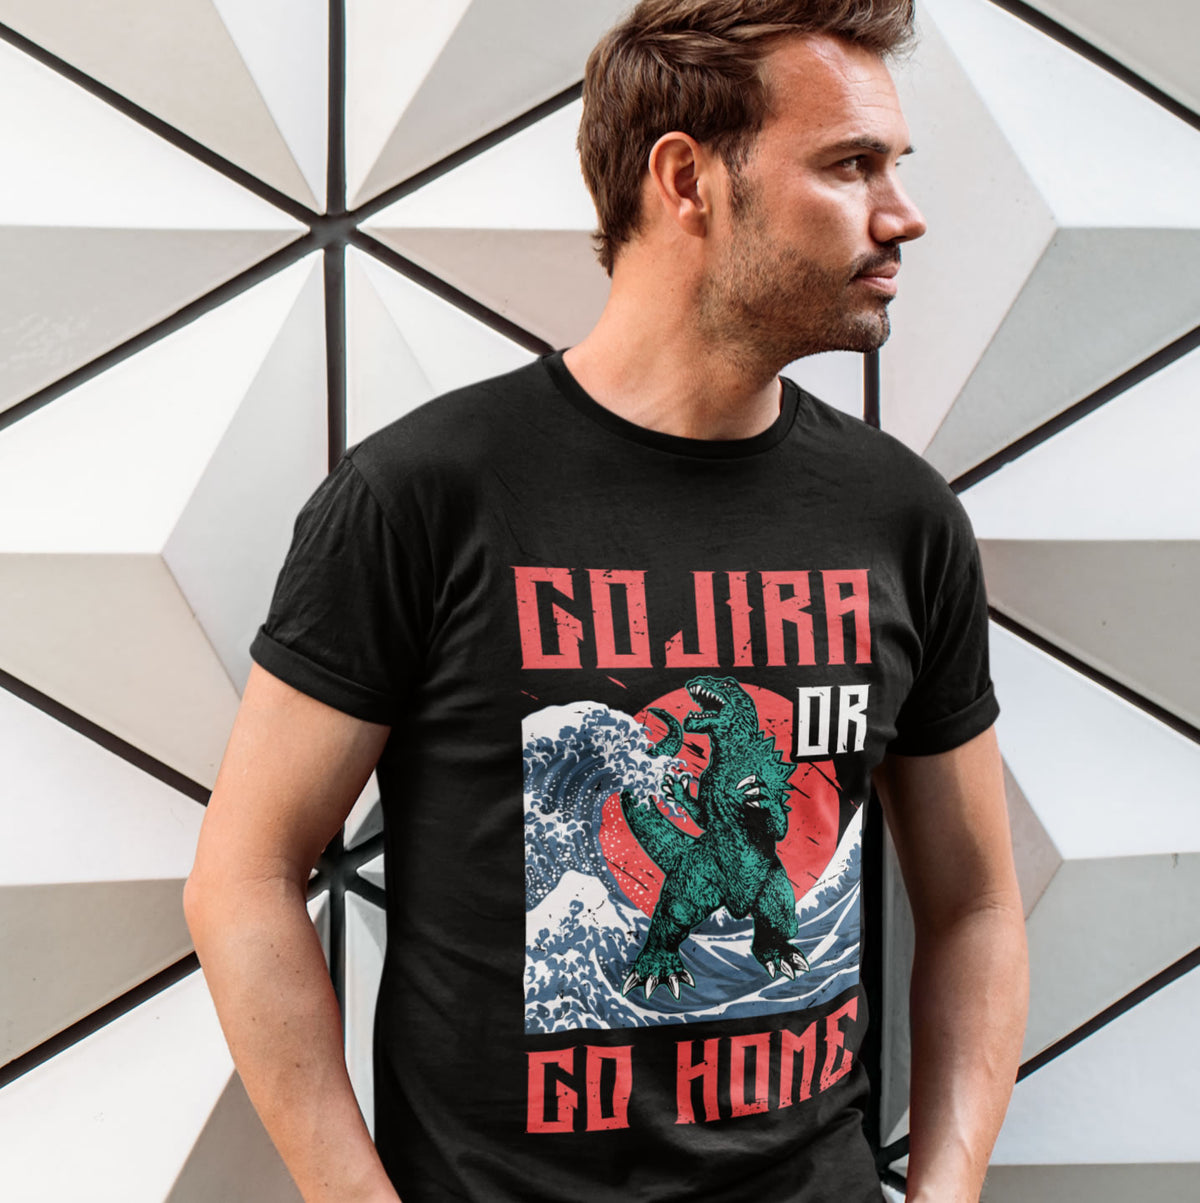 Gojira Godzilla Monster Movie Lover Shirt | Japanese Art Pop Culture Gift | Unisex Jersey T-shirt